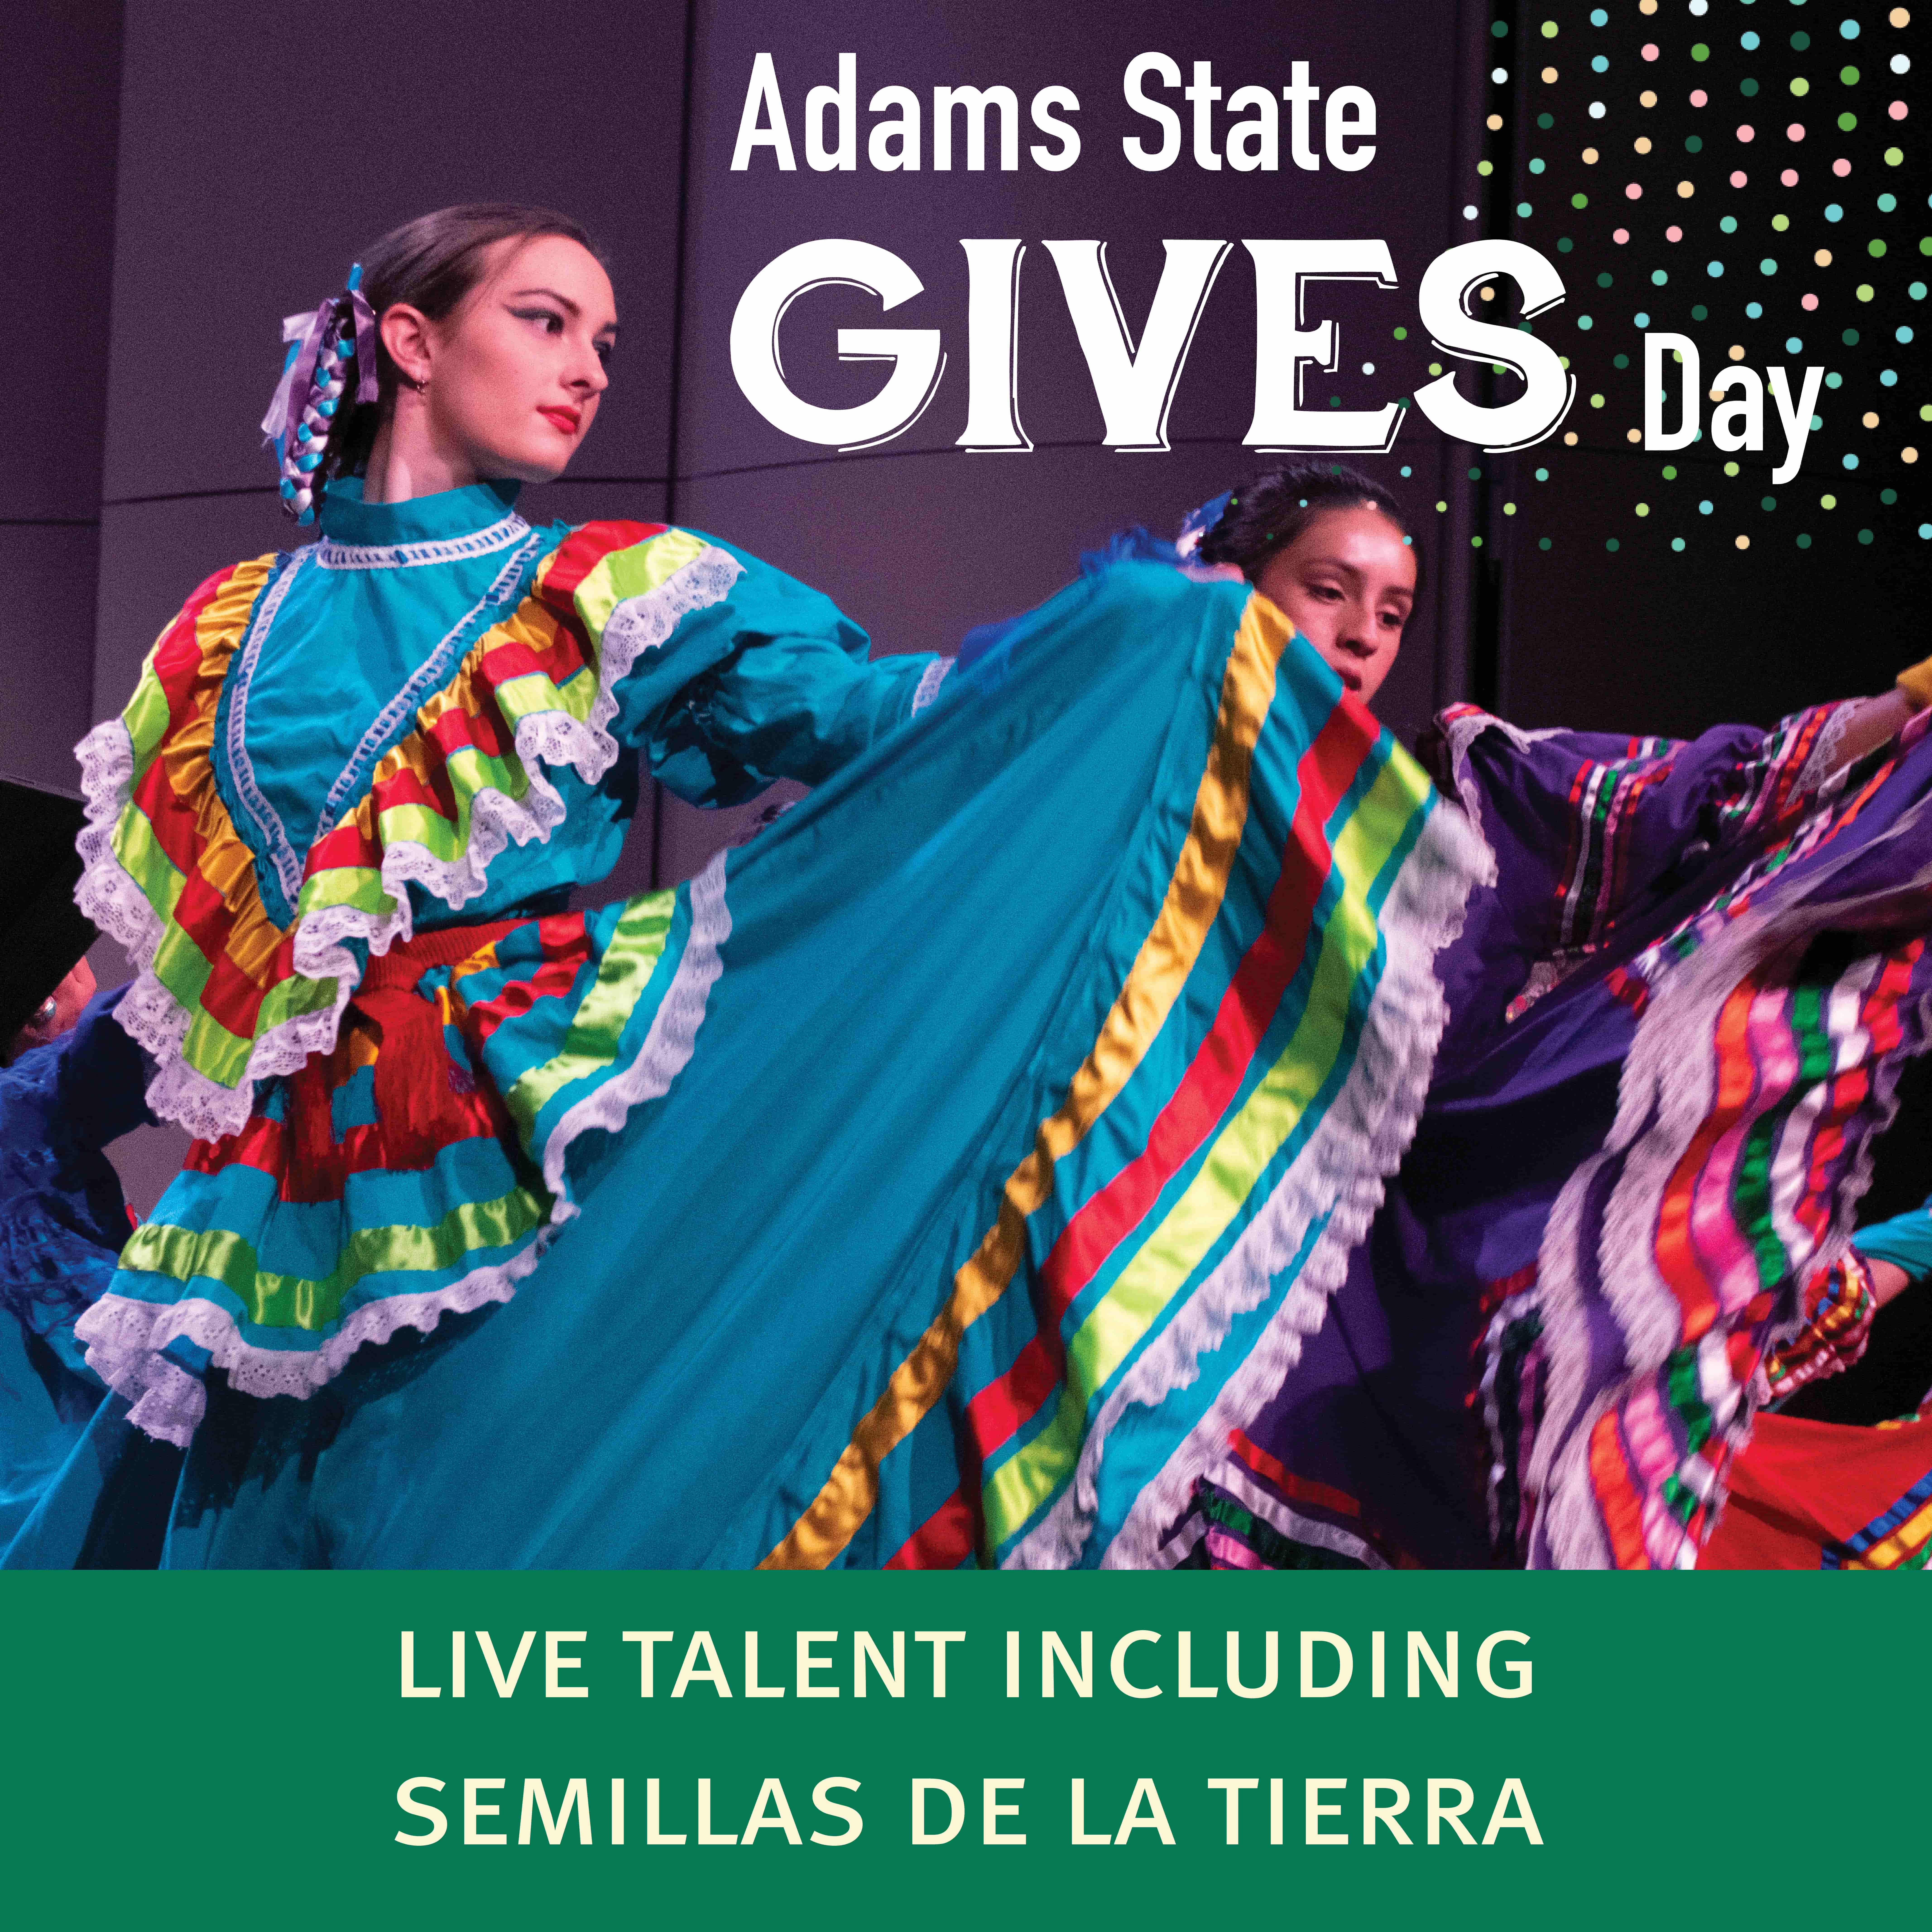 Adams State GIVES Day Live talent including Semillas de la Tierra